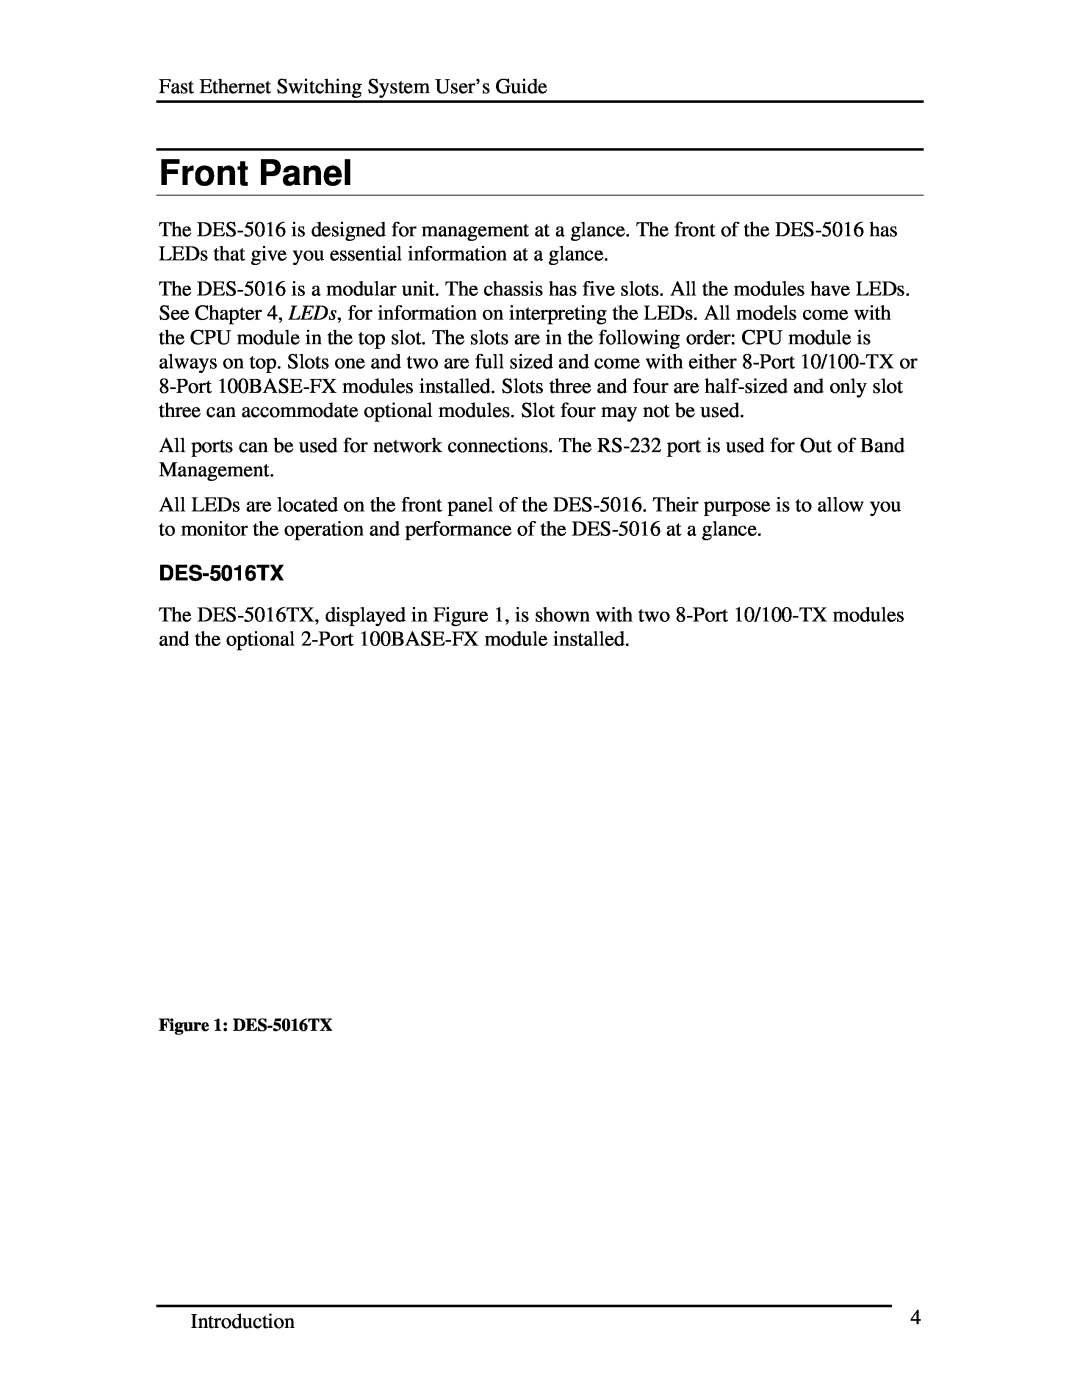 D-Link manual Front Panel, DES-5016TX 